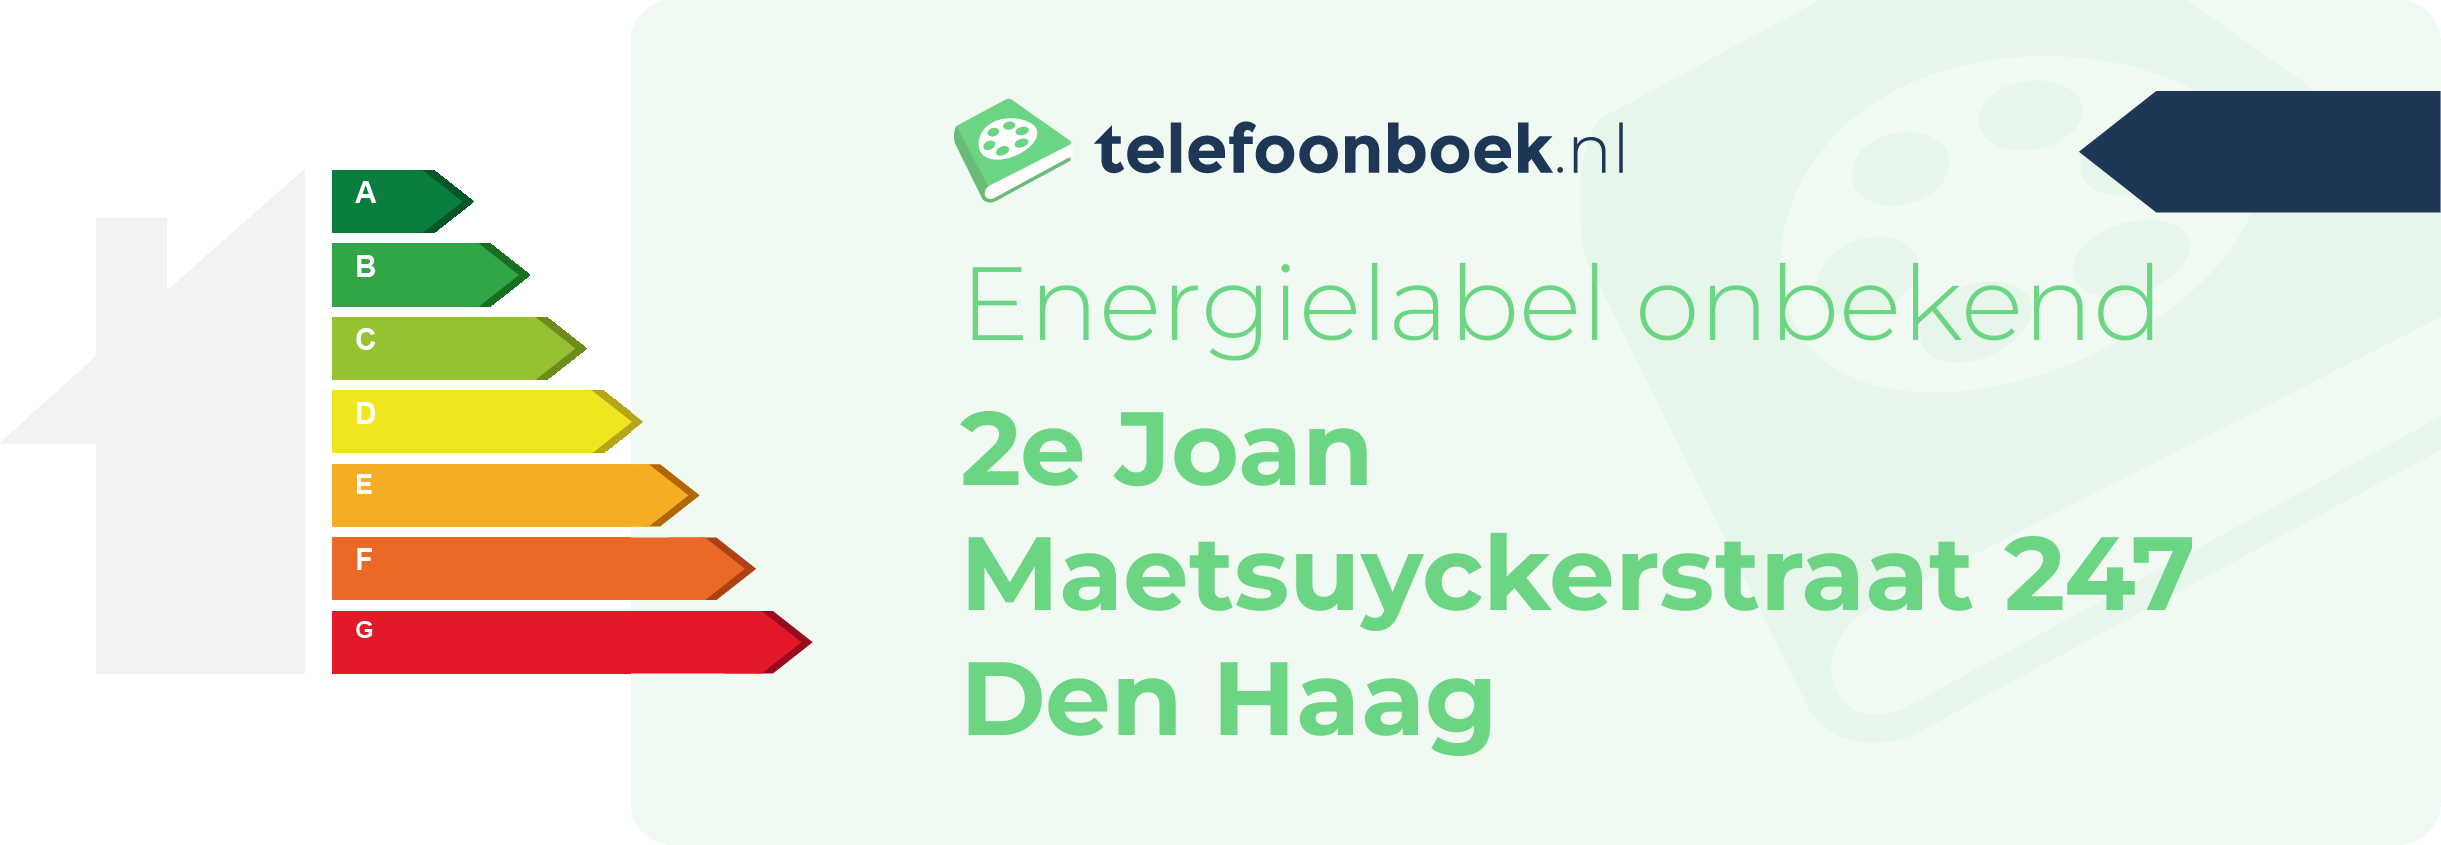 Energielabel 2e Joan Maetsuyckerstraat 247 Den Haag